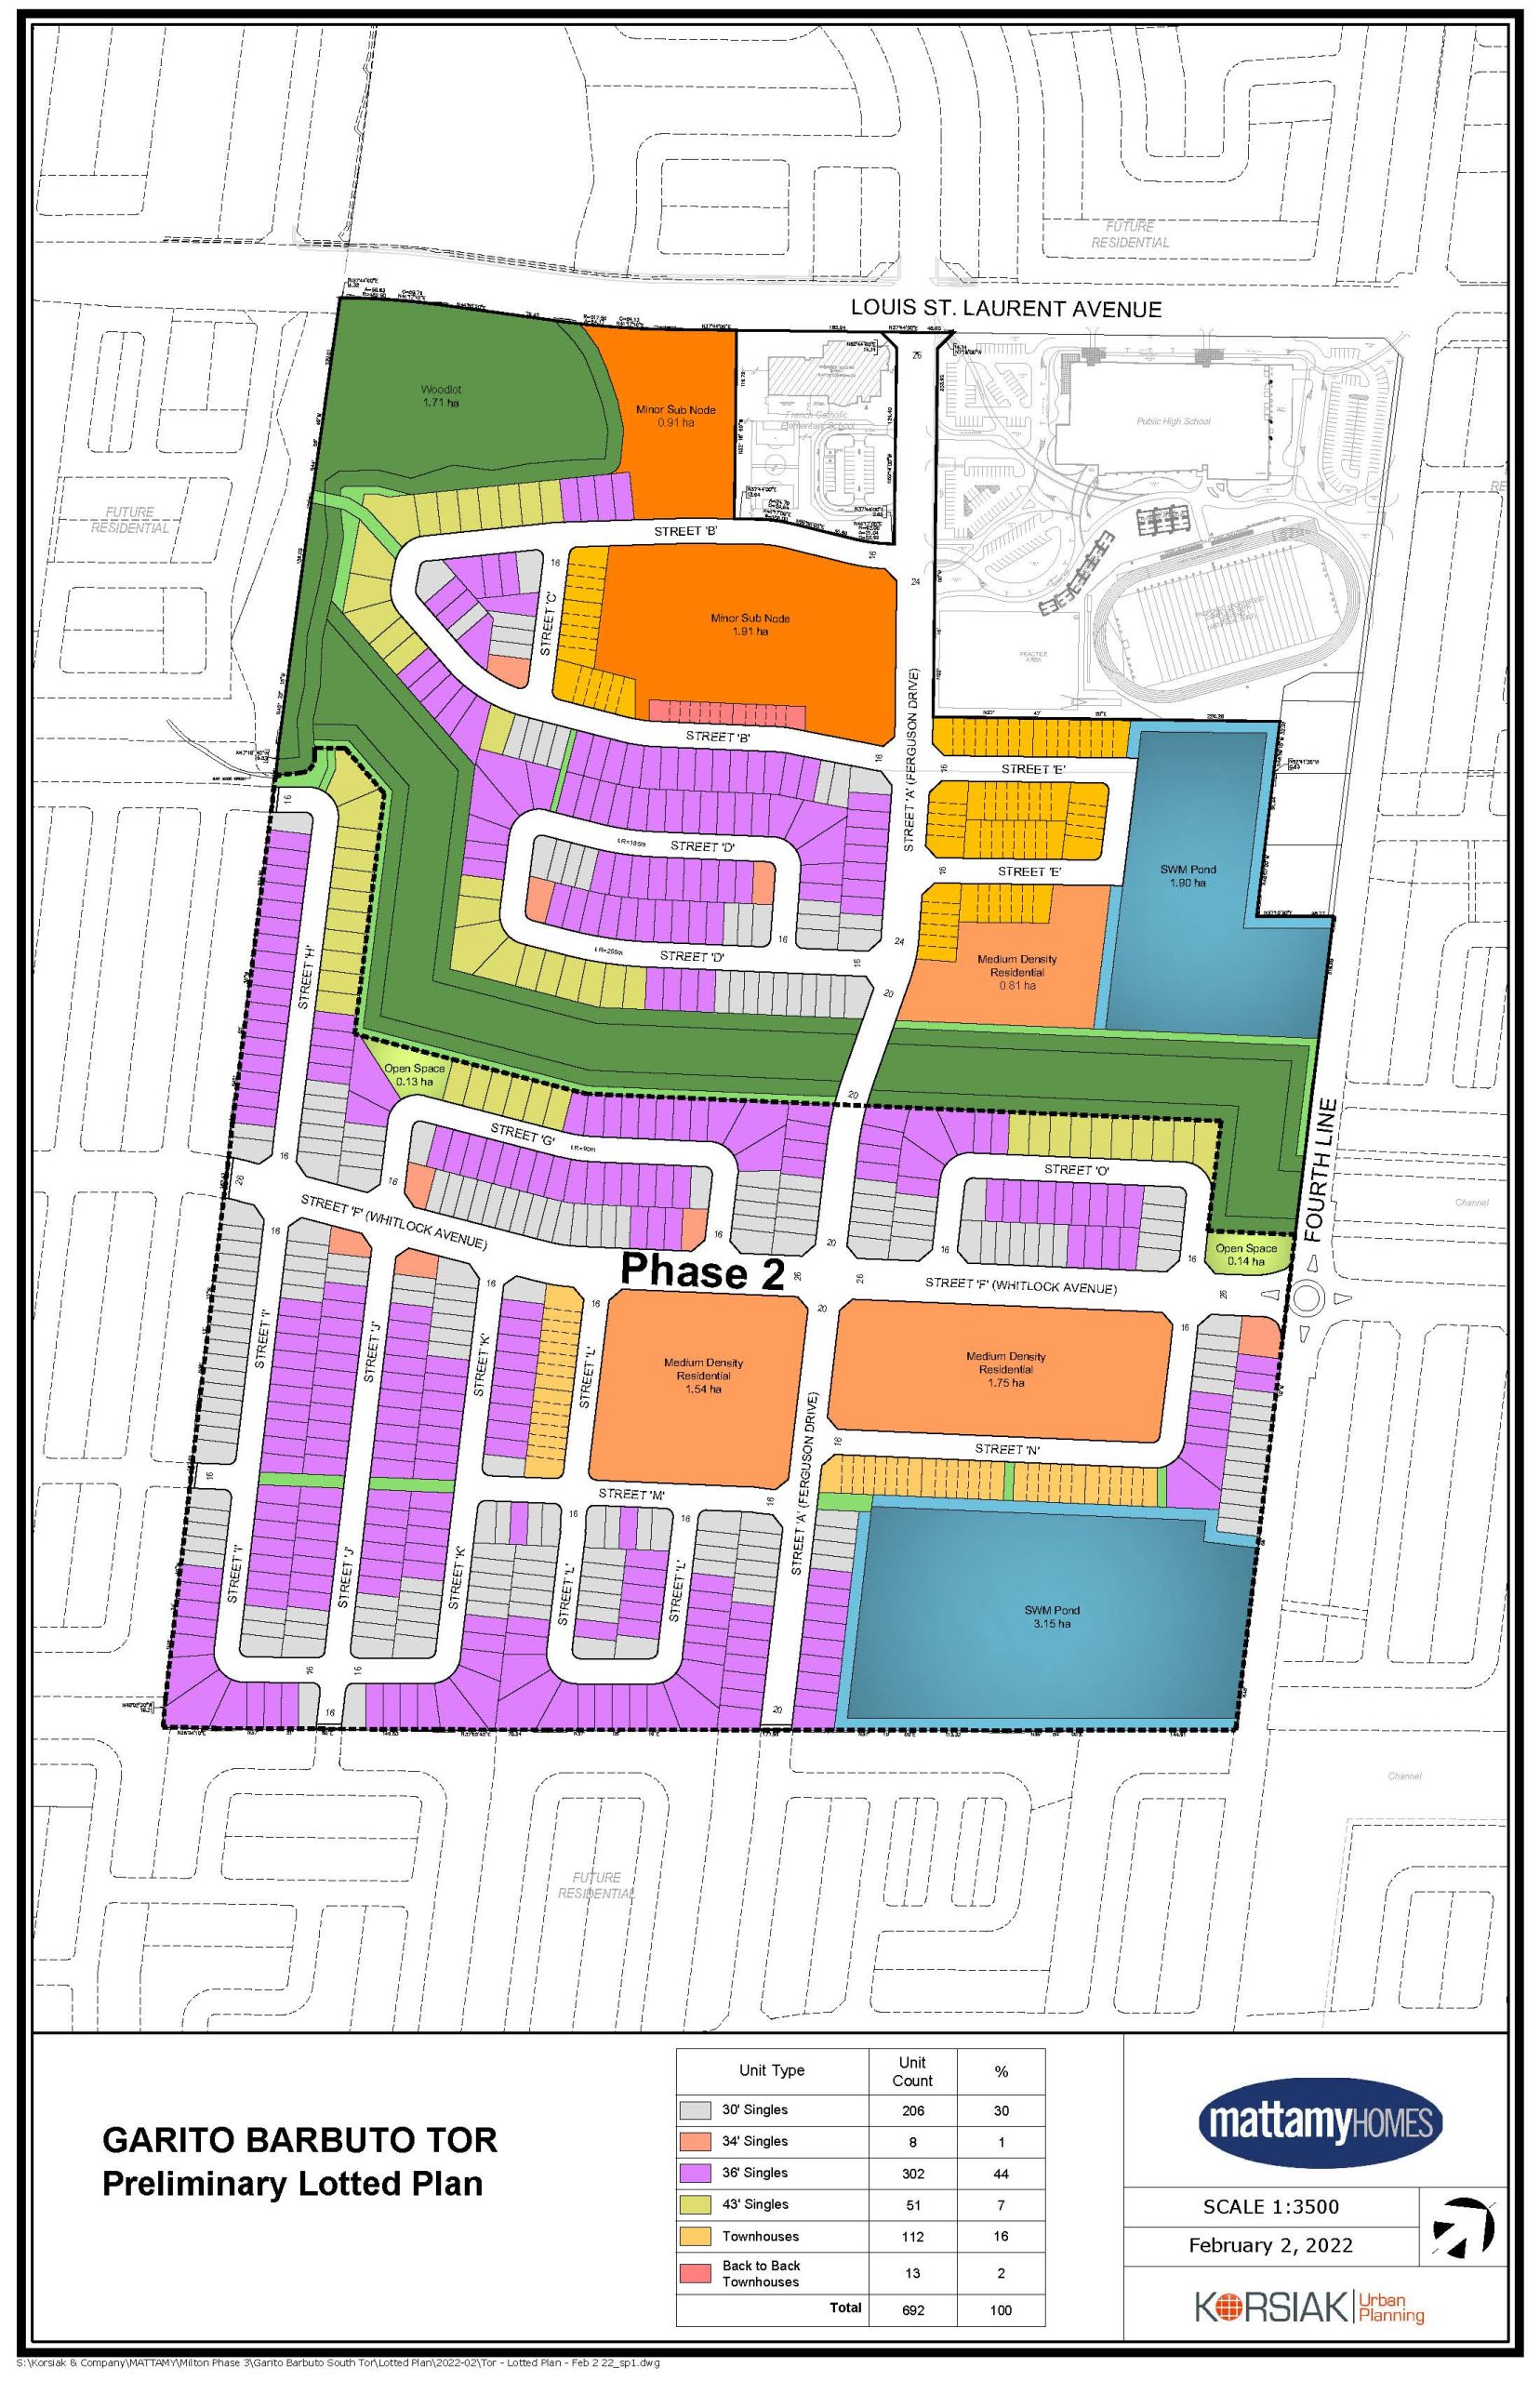 Korsiak Urban Planning - Milton Portfolio - Louis St. Laurent Avenue, Infill Development - Milton, Ontario